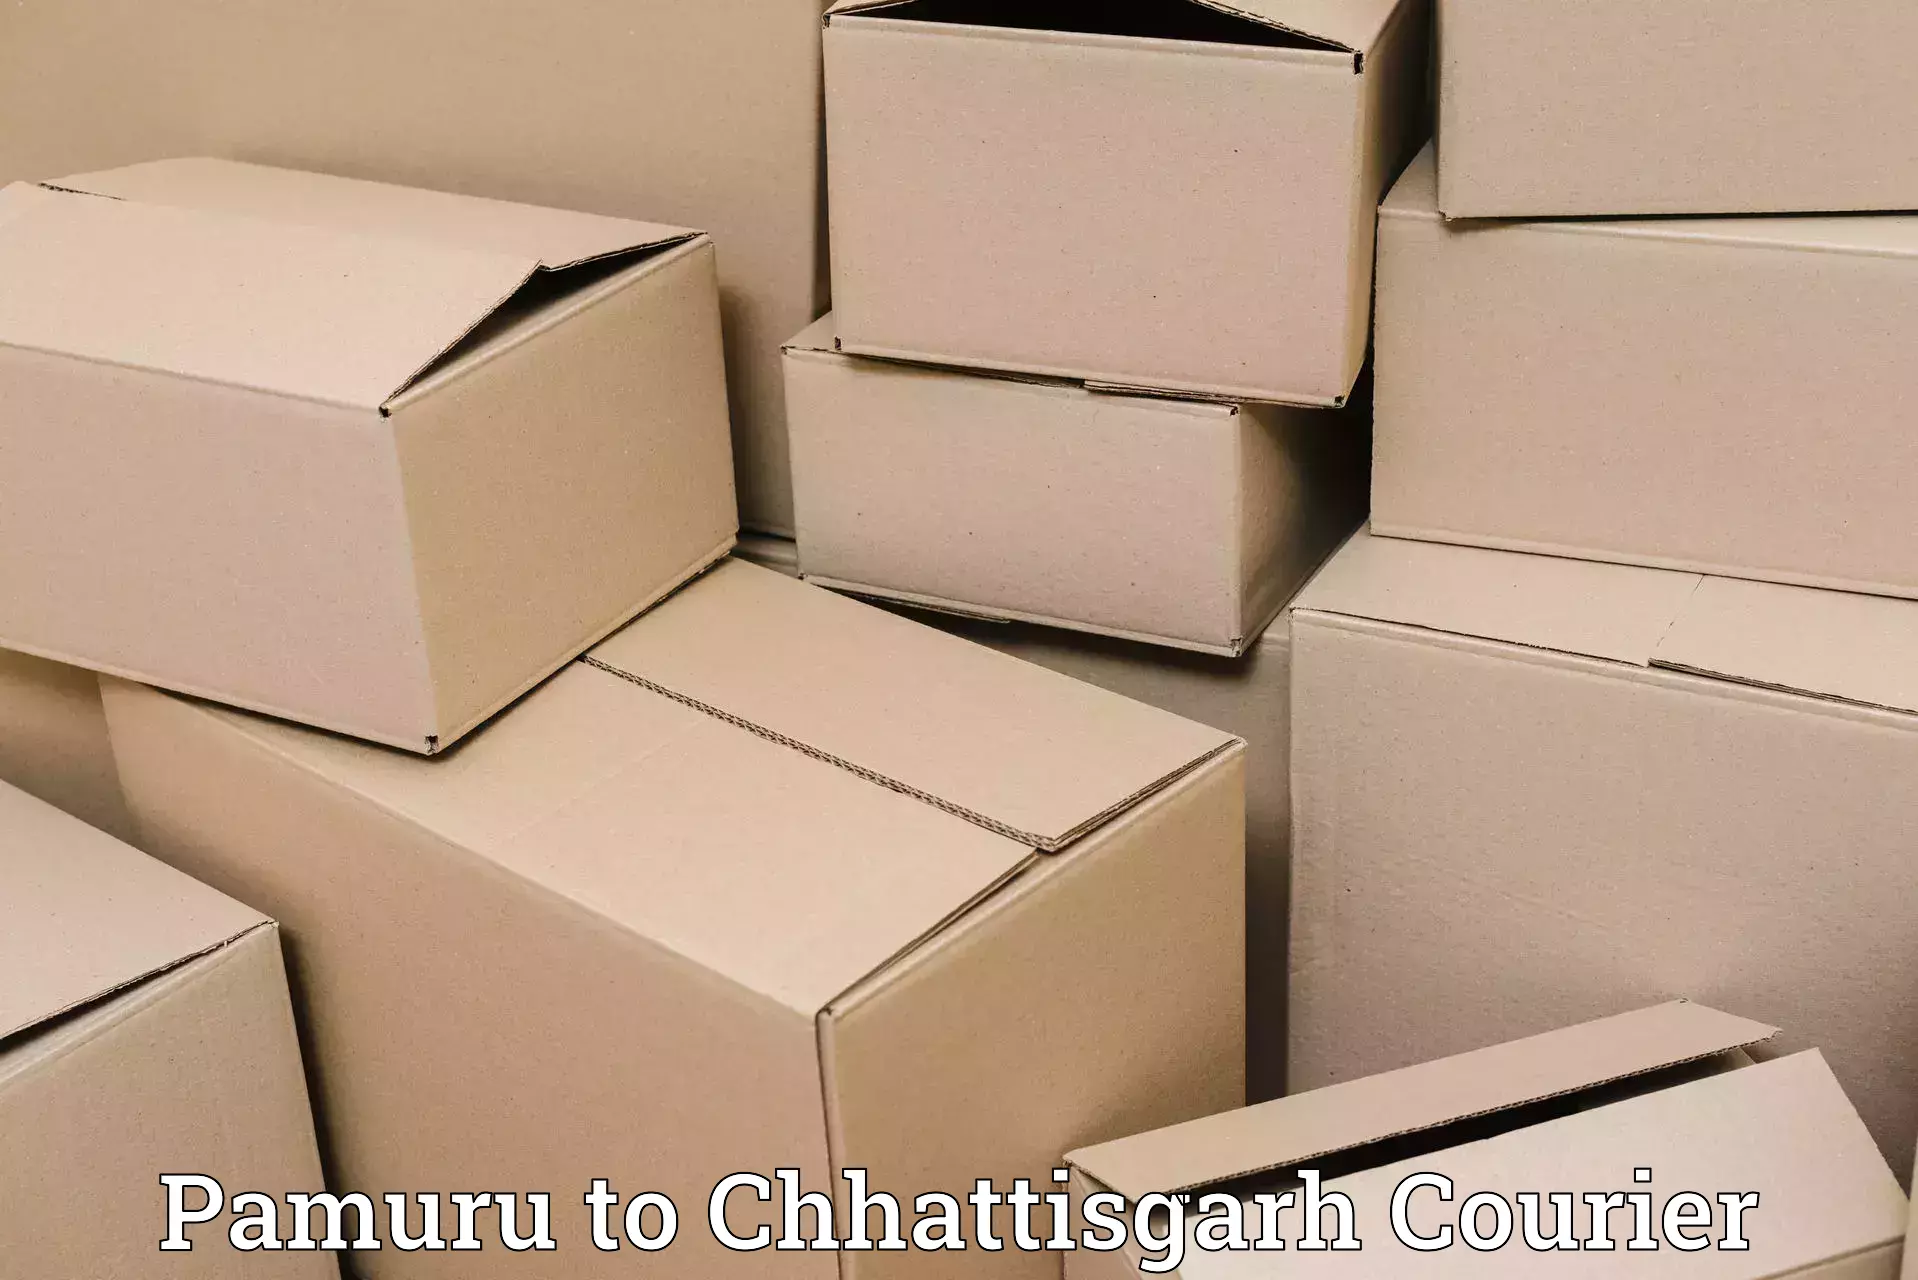 Courier service booking in Pamuru to Korea Chhattisgarh